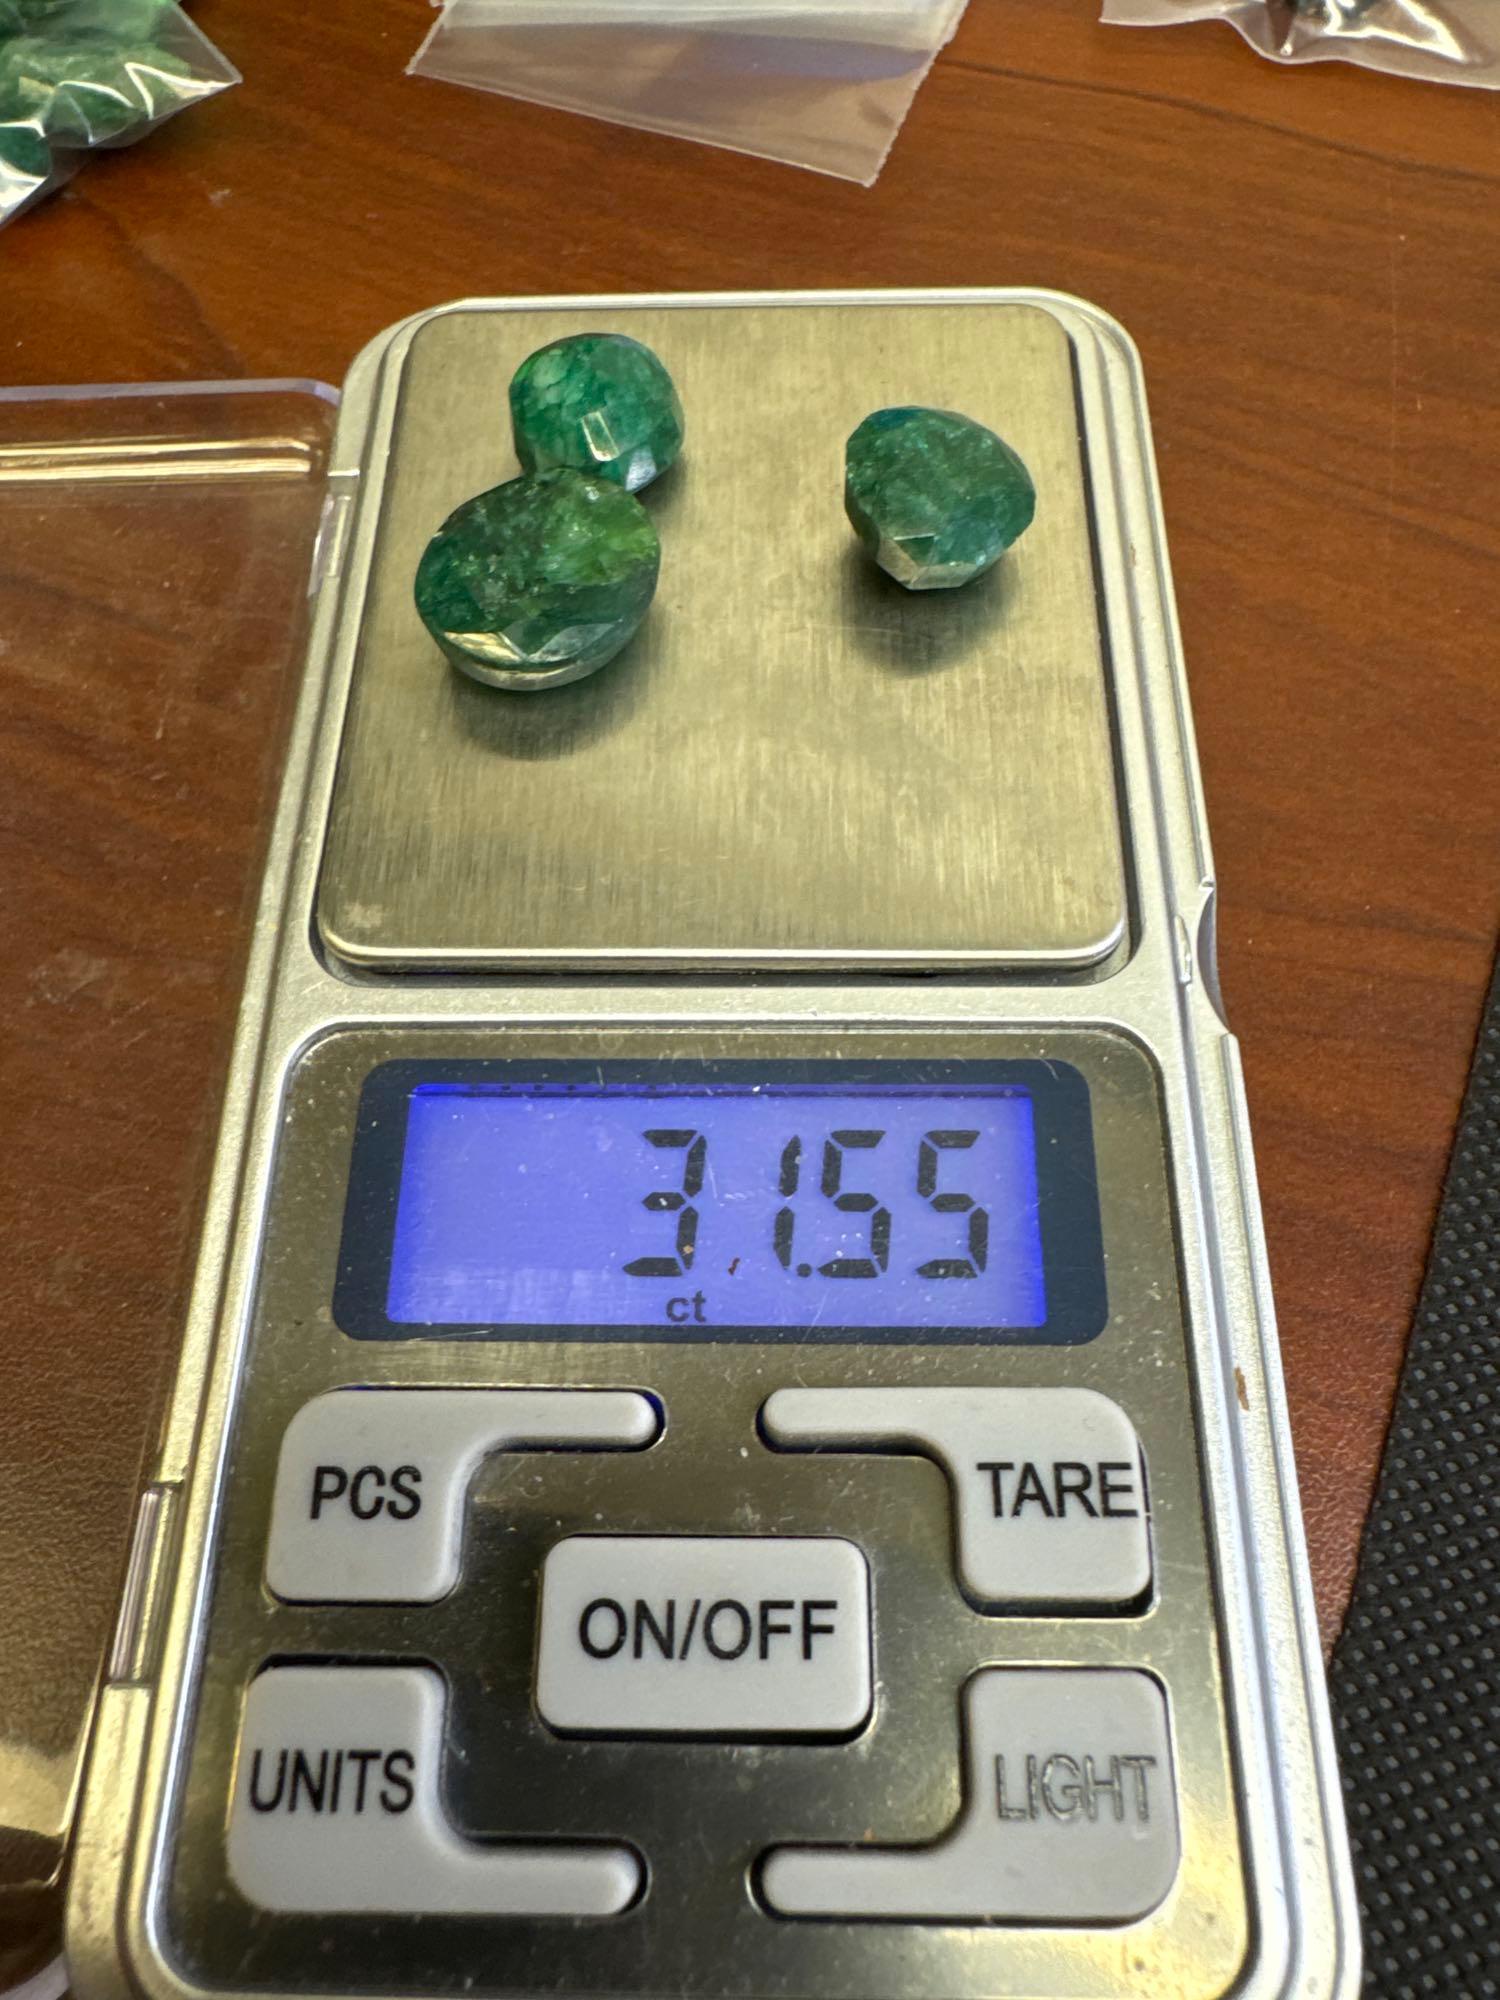 3x Green emerald Gemstones 31.55 Ct